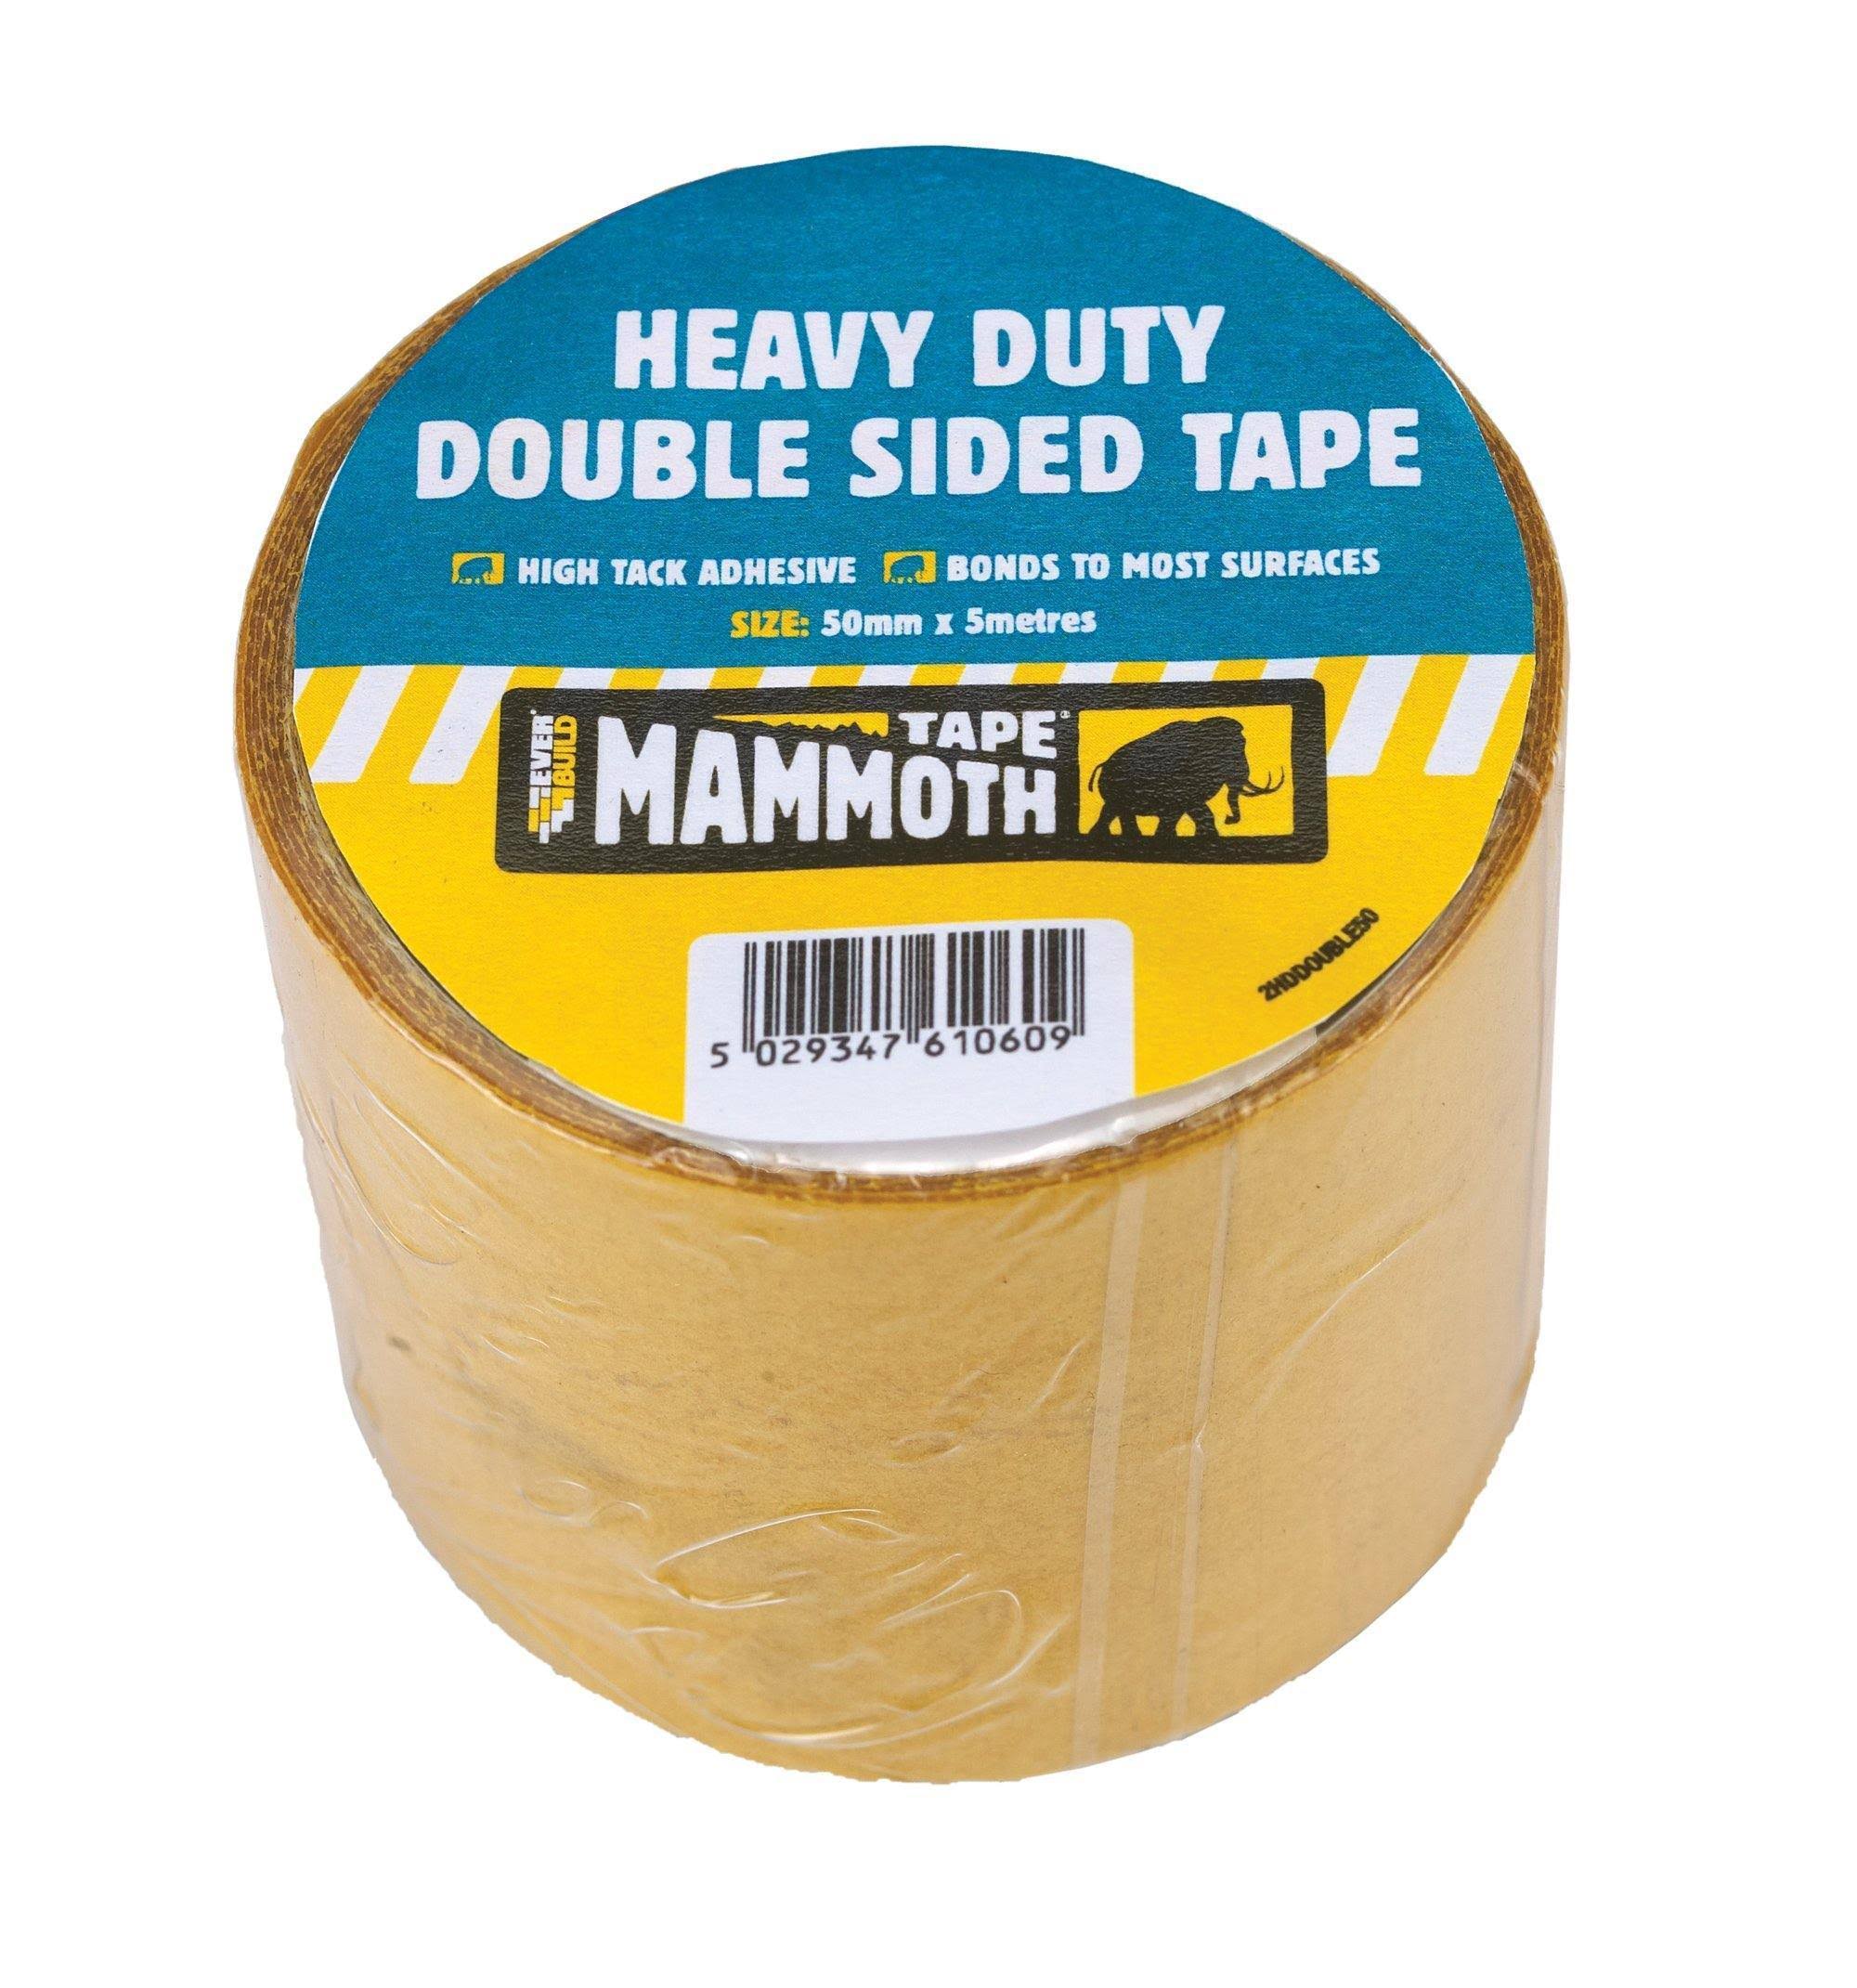 Mammoth Tape Heavy Duty Double Sided Tape